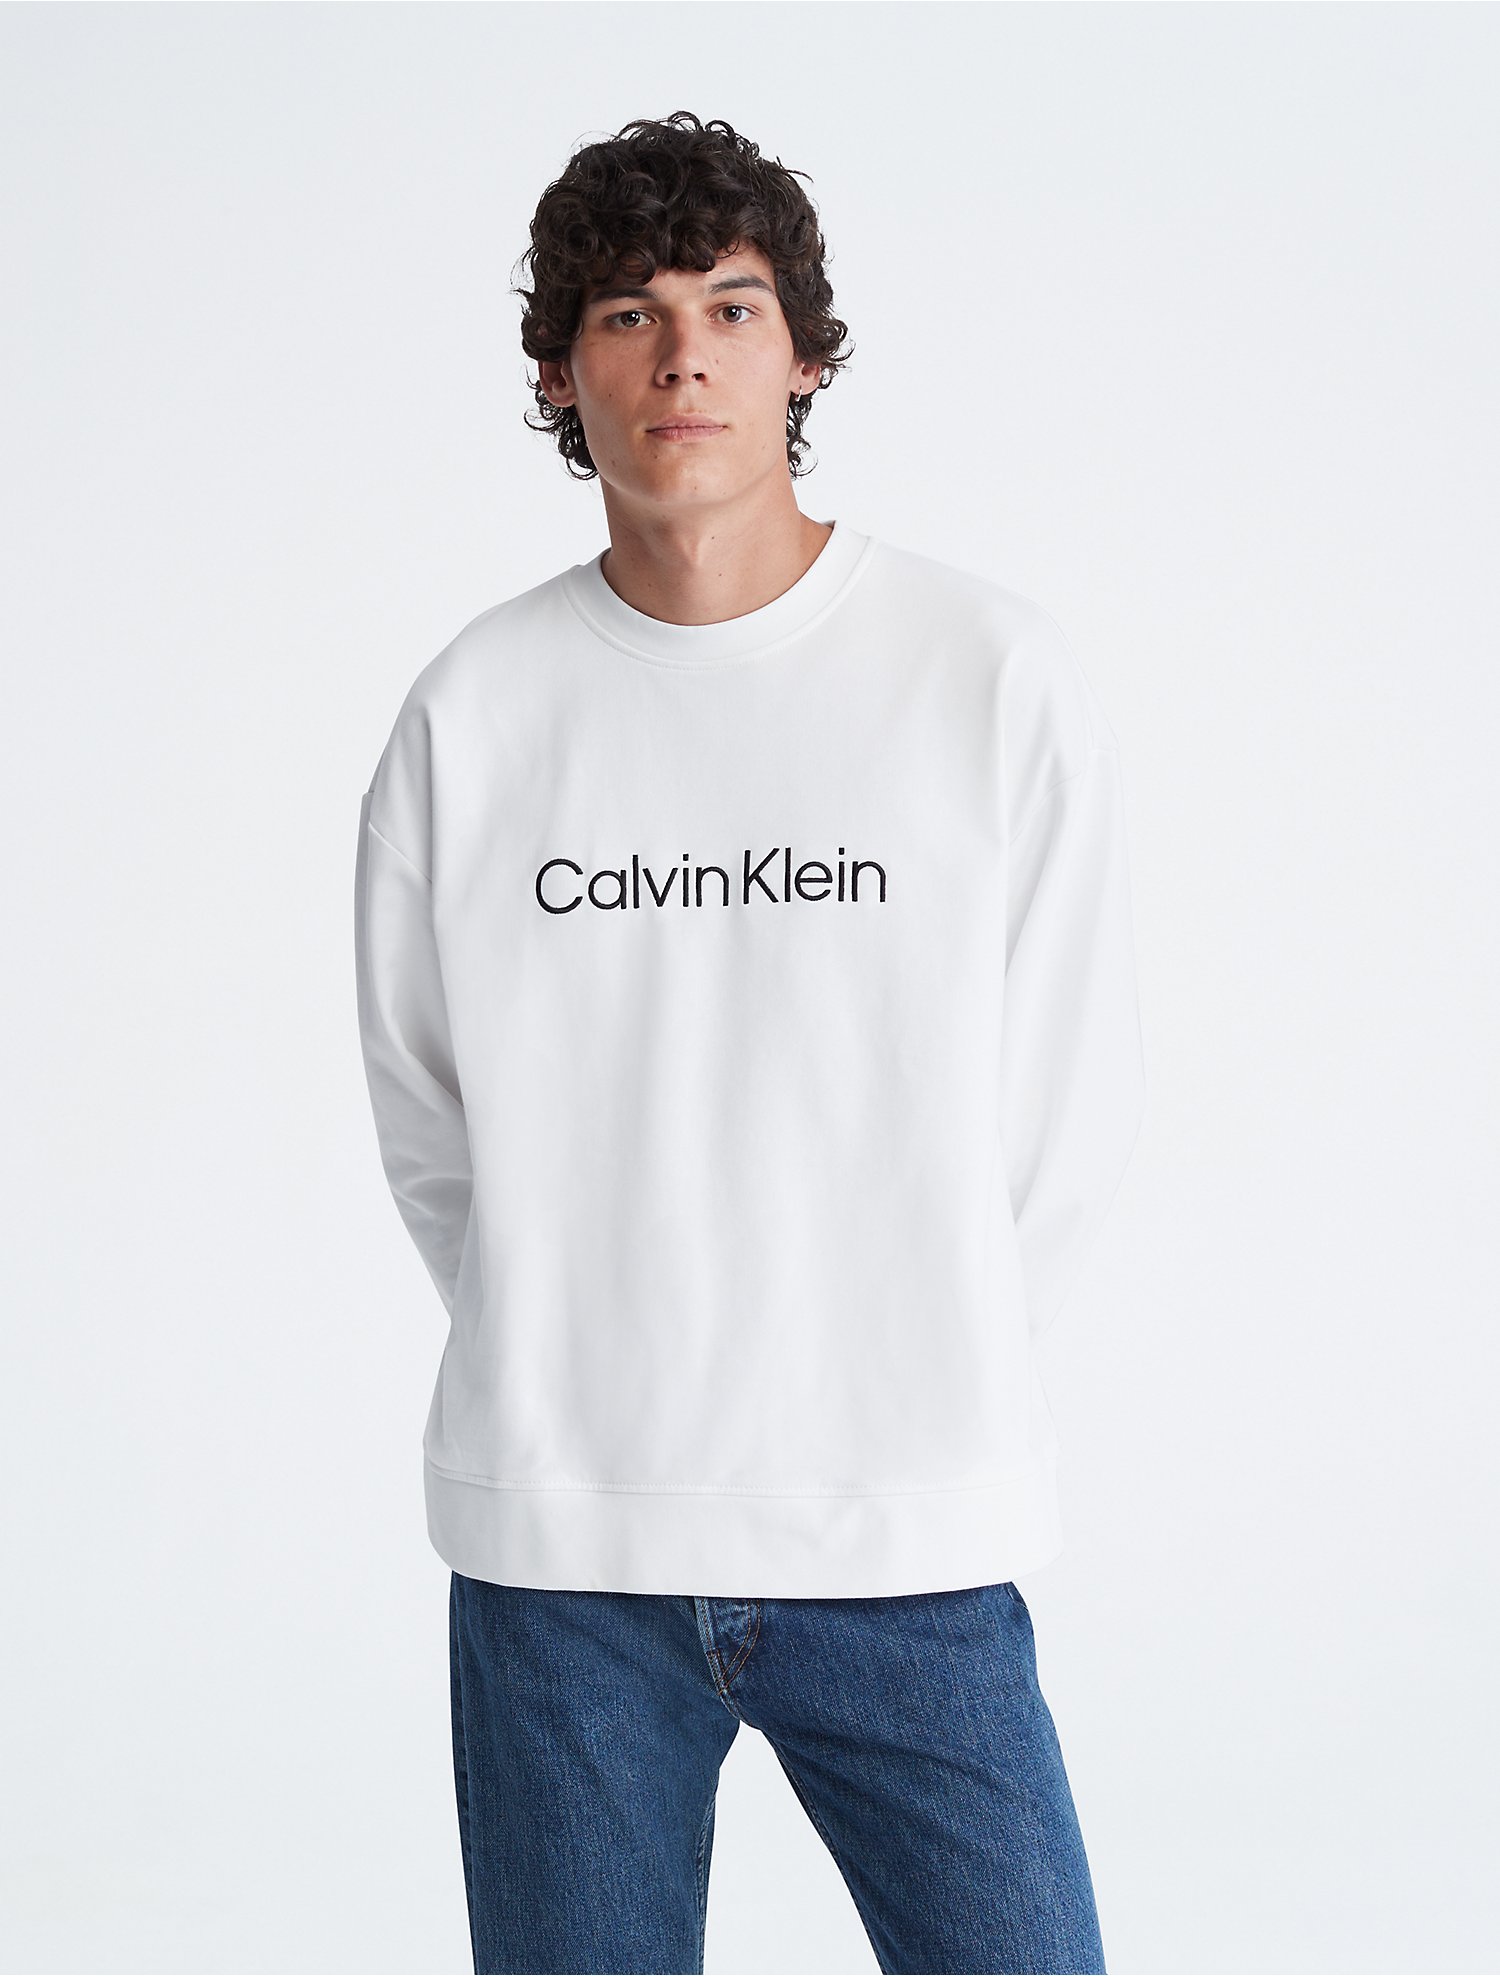 Scenario rand Geometrie Relaxed Fit Standard Logo Crewneck Sweatshirt | Calvin Klein